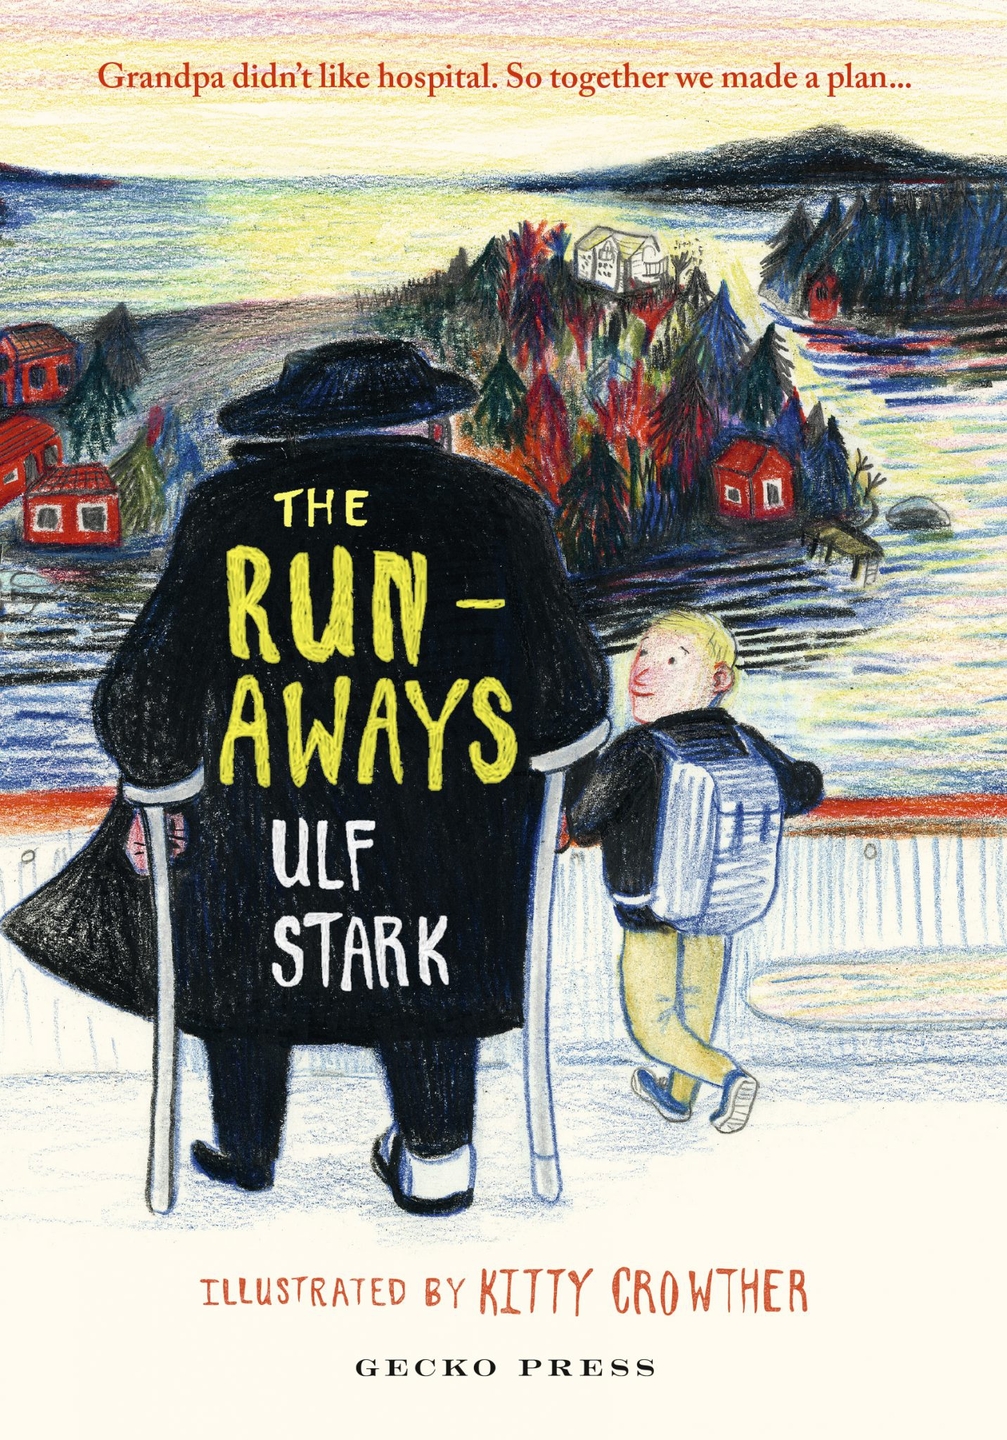 The Runaways by Ulf Stark. A children's novel by Gecko Press